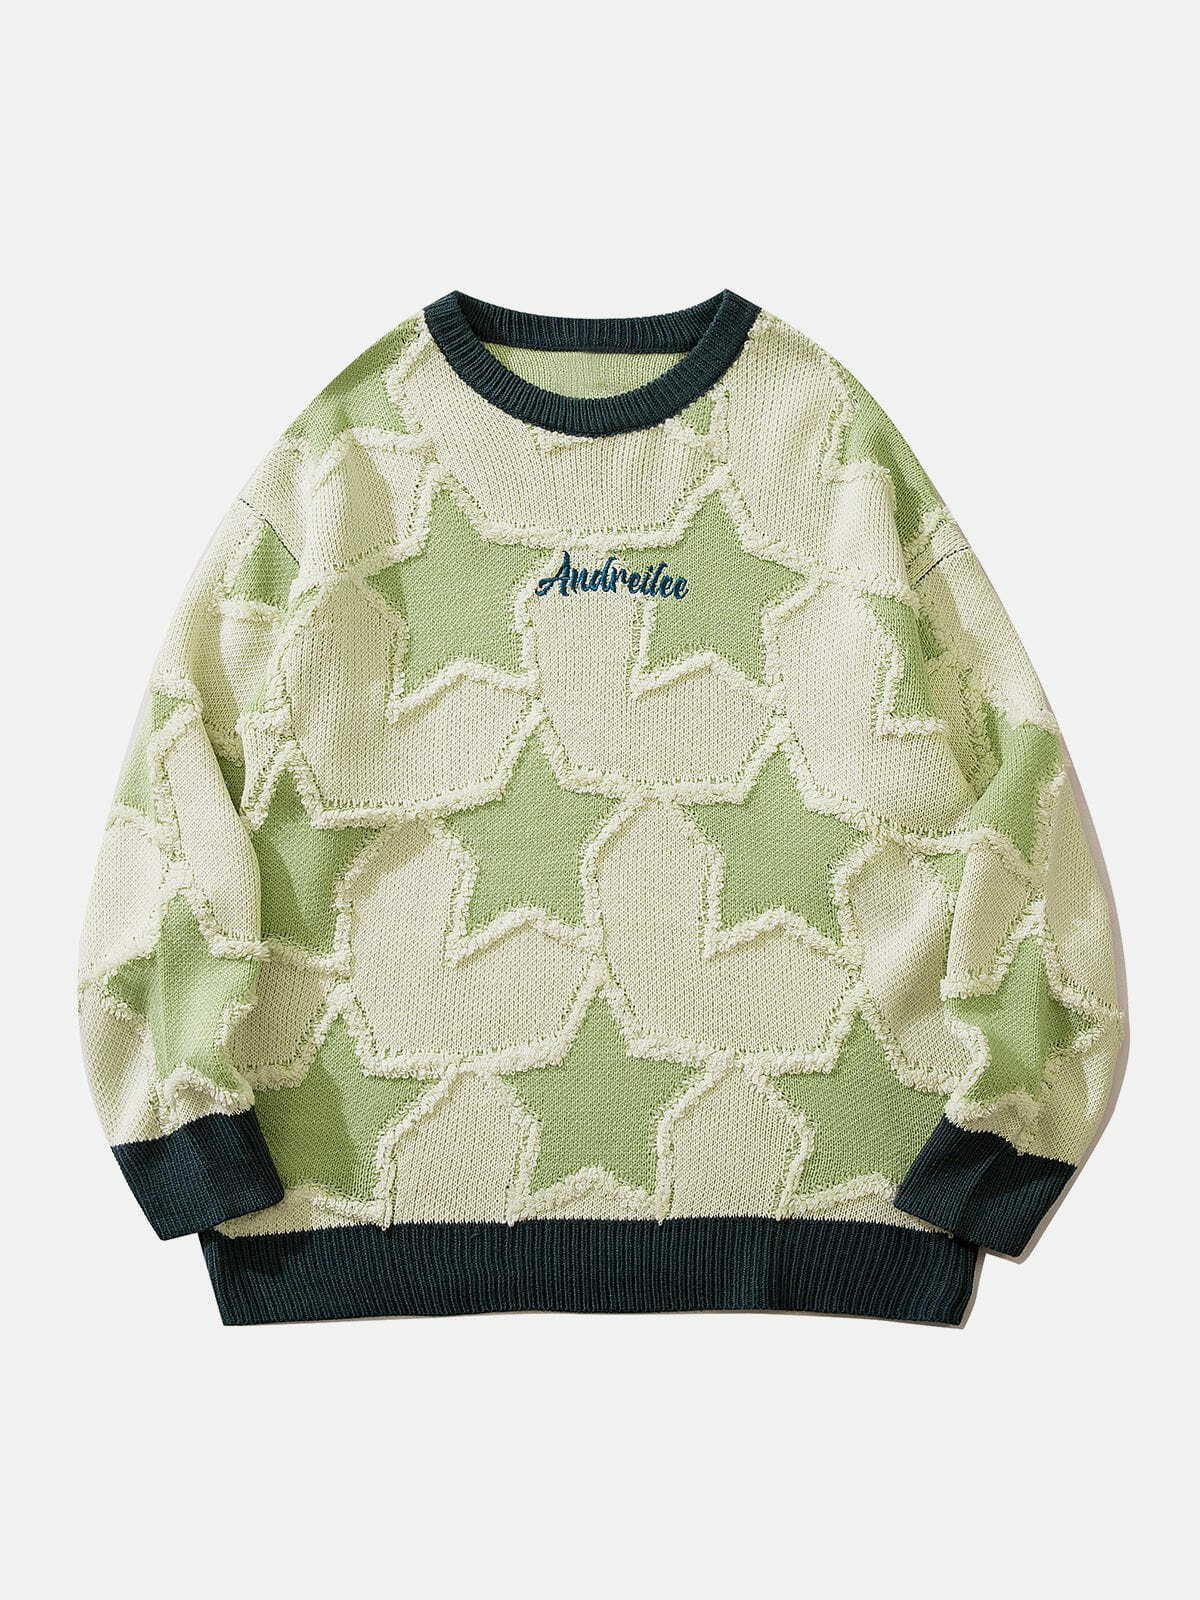 pentagram embroidered sweater edgy & trendy streetwear 6628